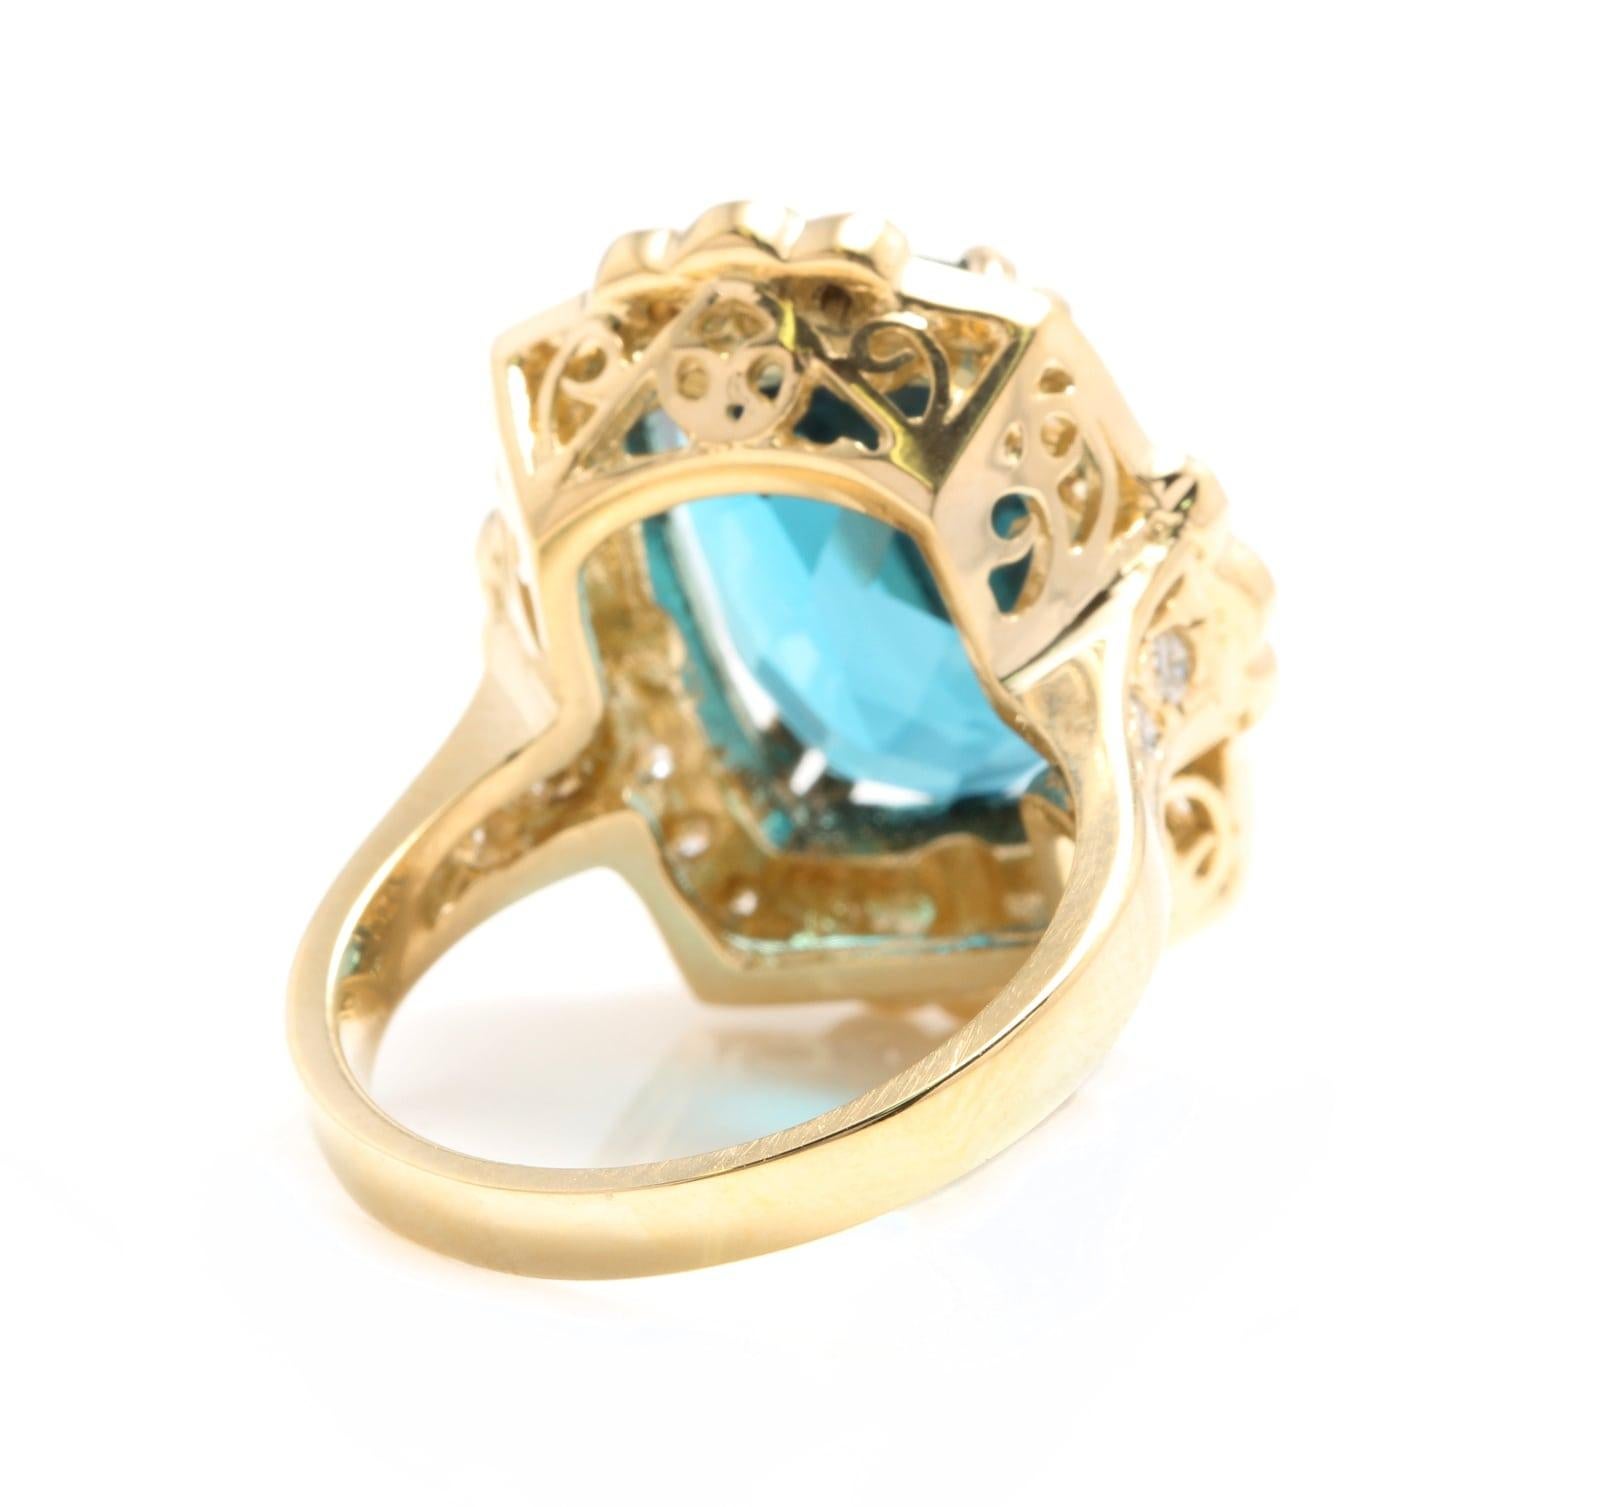 Mixed Cut 13.75 Carat Natural Impressive London Blue Topaz and Diamond 14 Karat Gold Ring For Sale